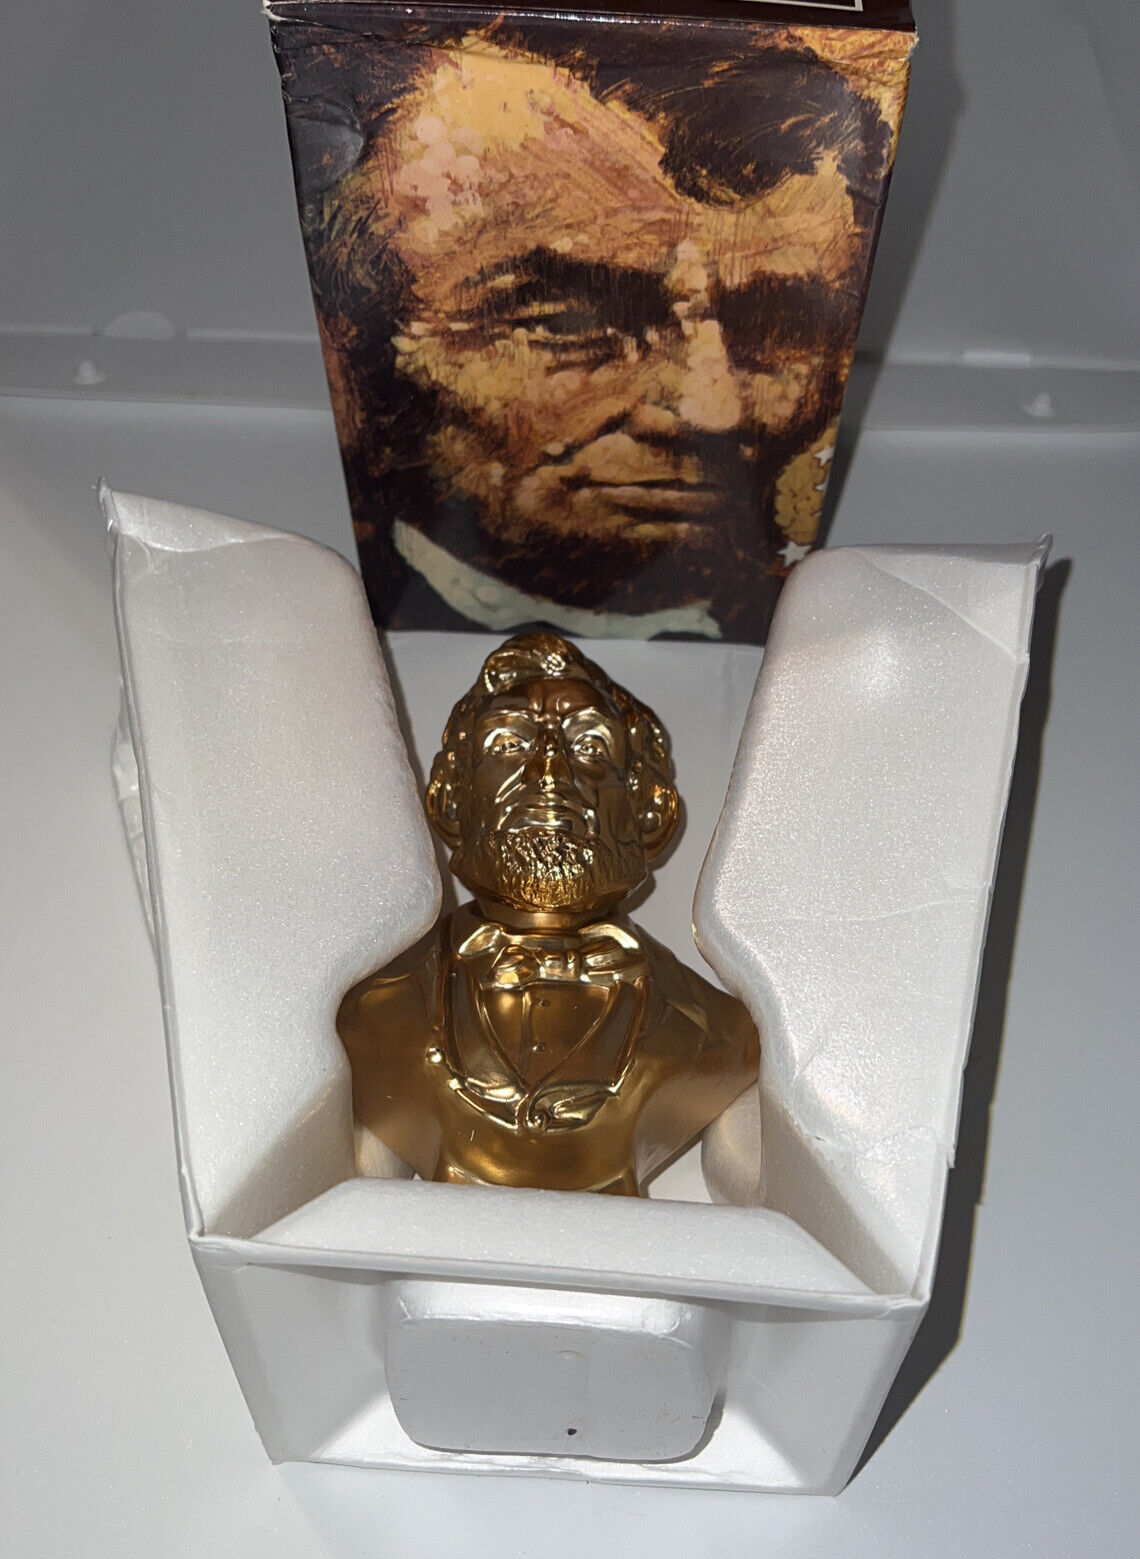 Vintage President Abe Lincoln Avon Decanter Gold (Deep Woods) 1979 Full W/Box